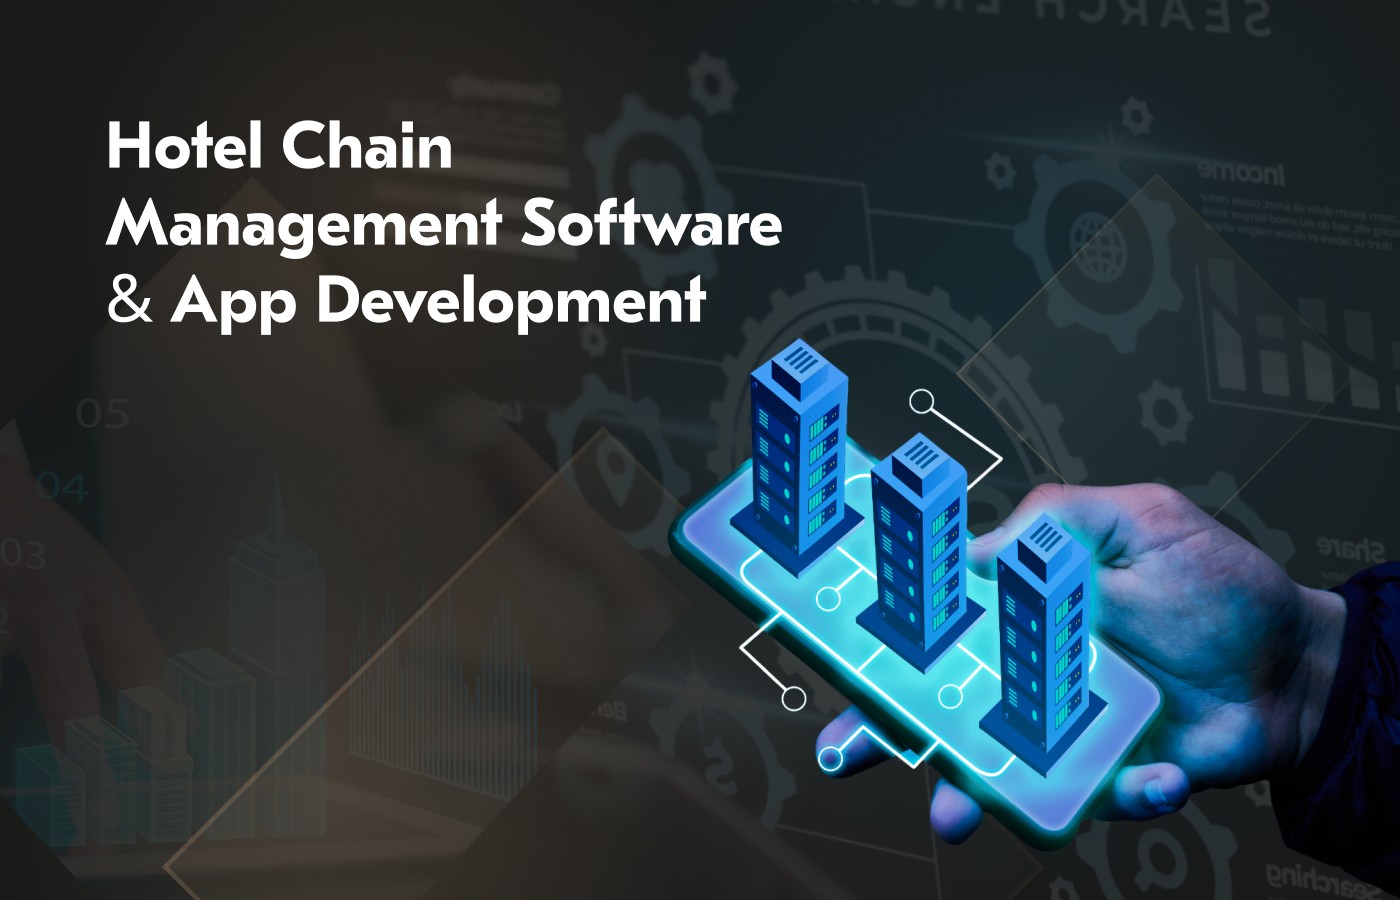 Hotel Chain Management Software & App Development